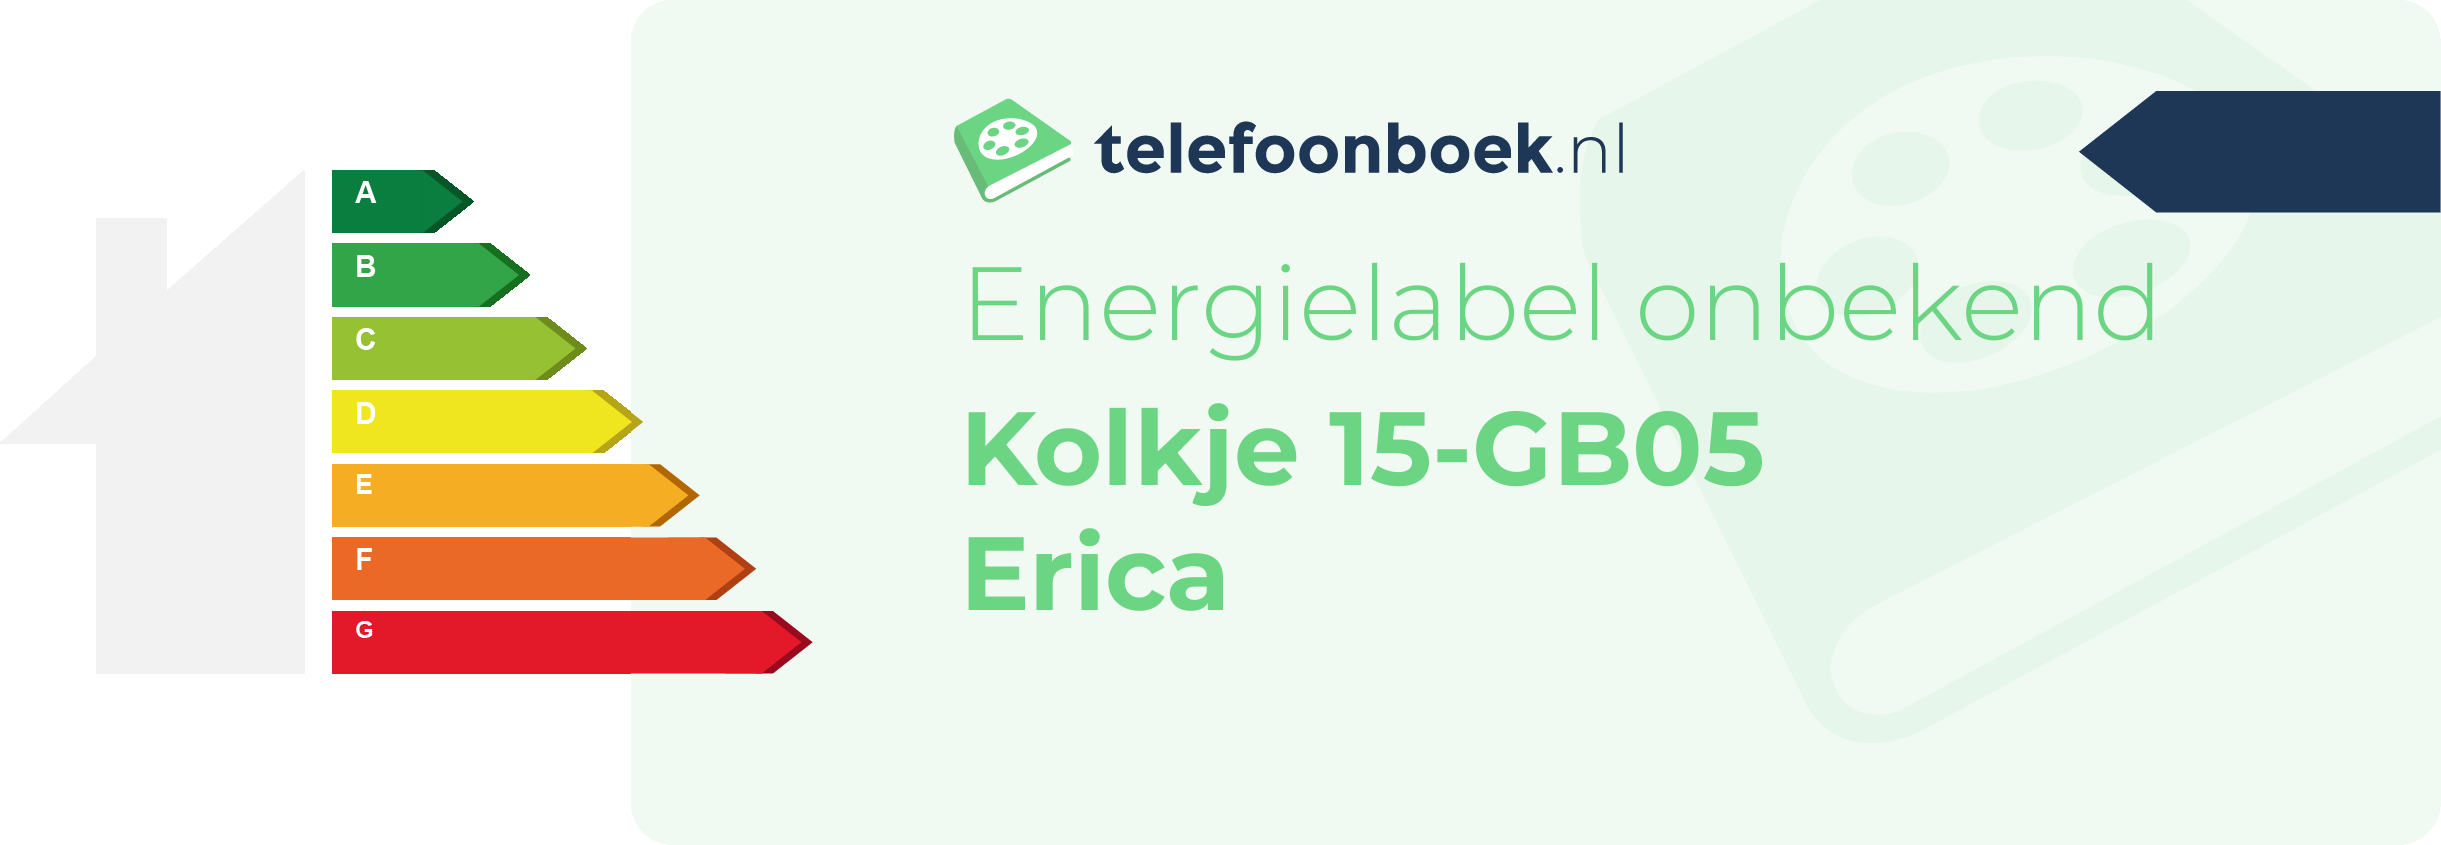 Energielabel Kolkje 15-GB05 Erica